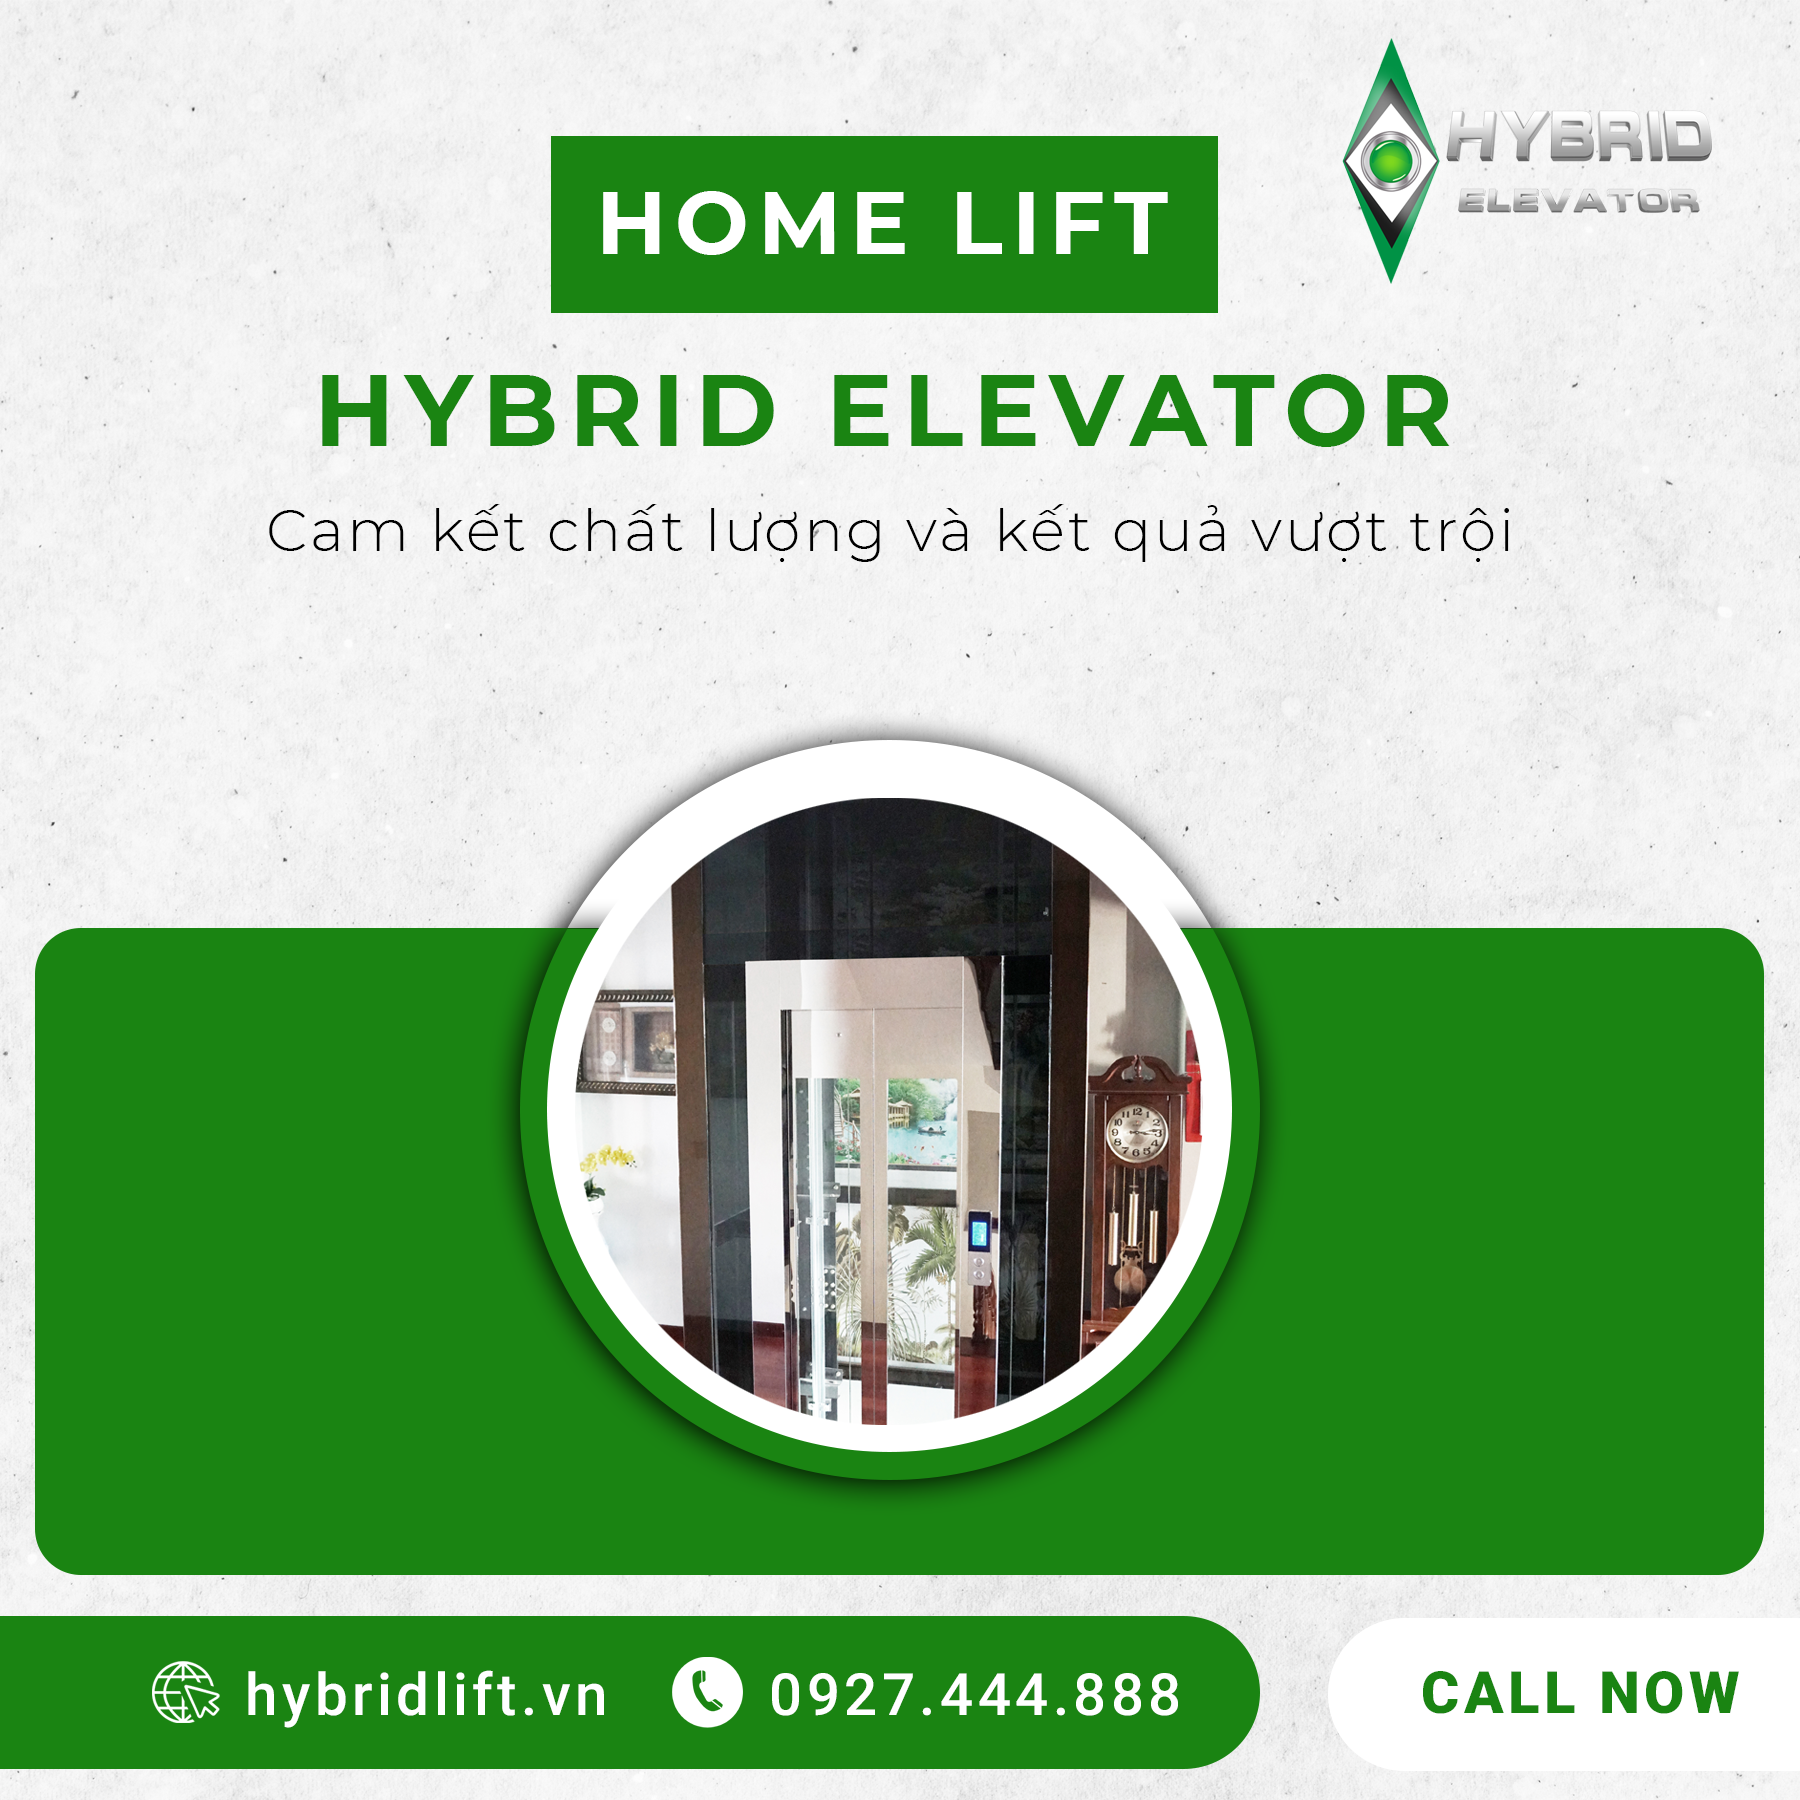 High Tech Lift - High Technology Elevator Hybrid